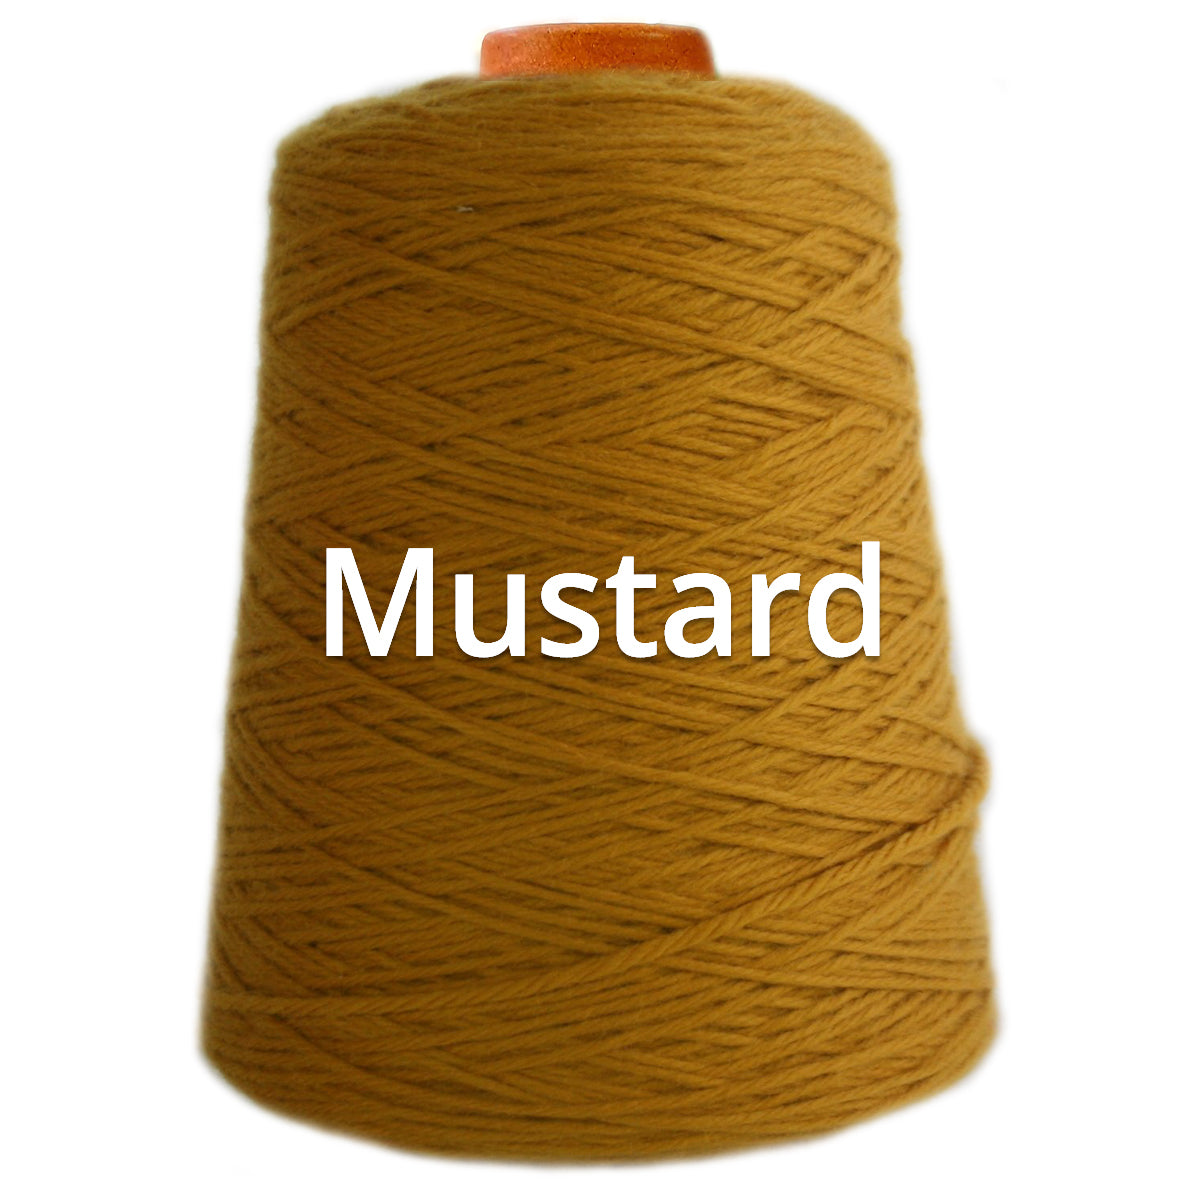 Mustard - Nundle Collection 12 ply Chaffey Yarn 400g Cone